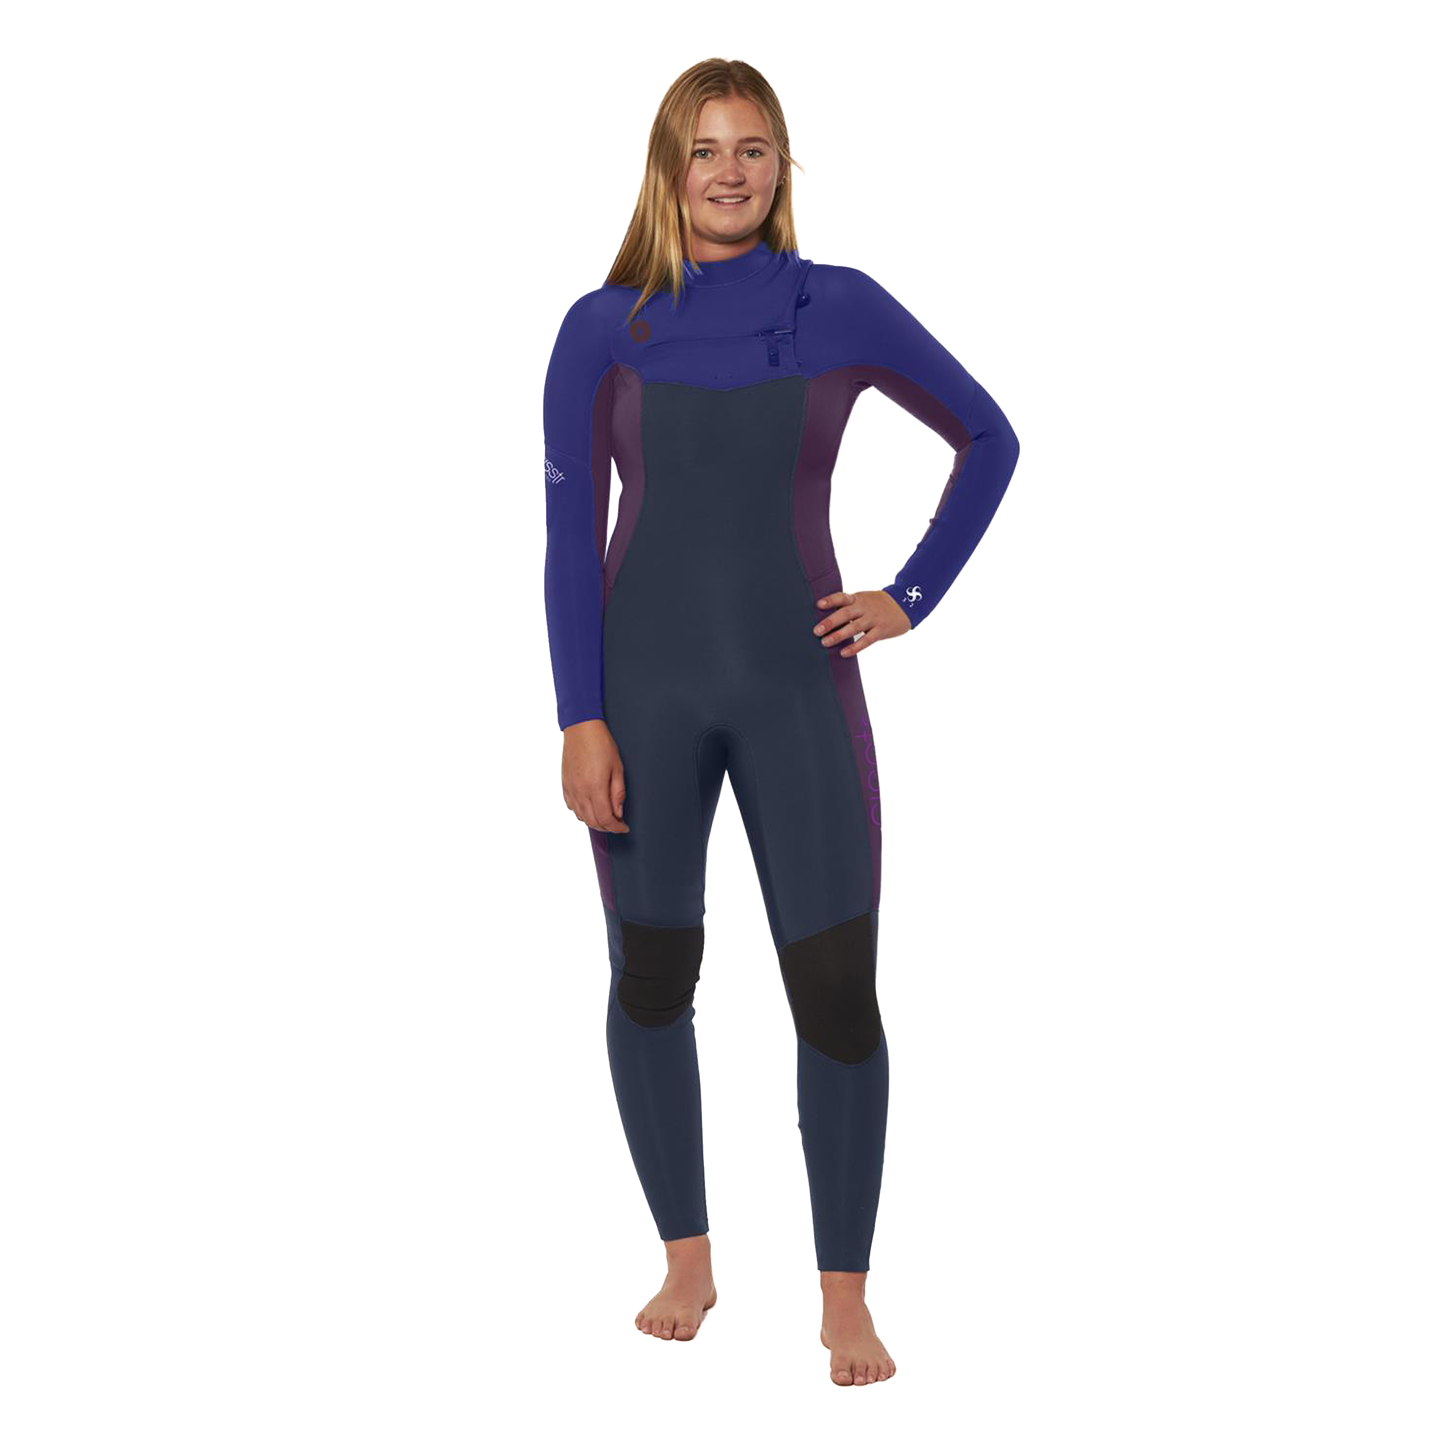 VISSLA Seven Seas 4-3 Chest zip full wetsuit Blue Moon